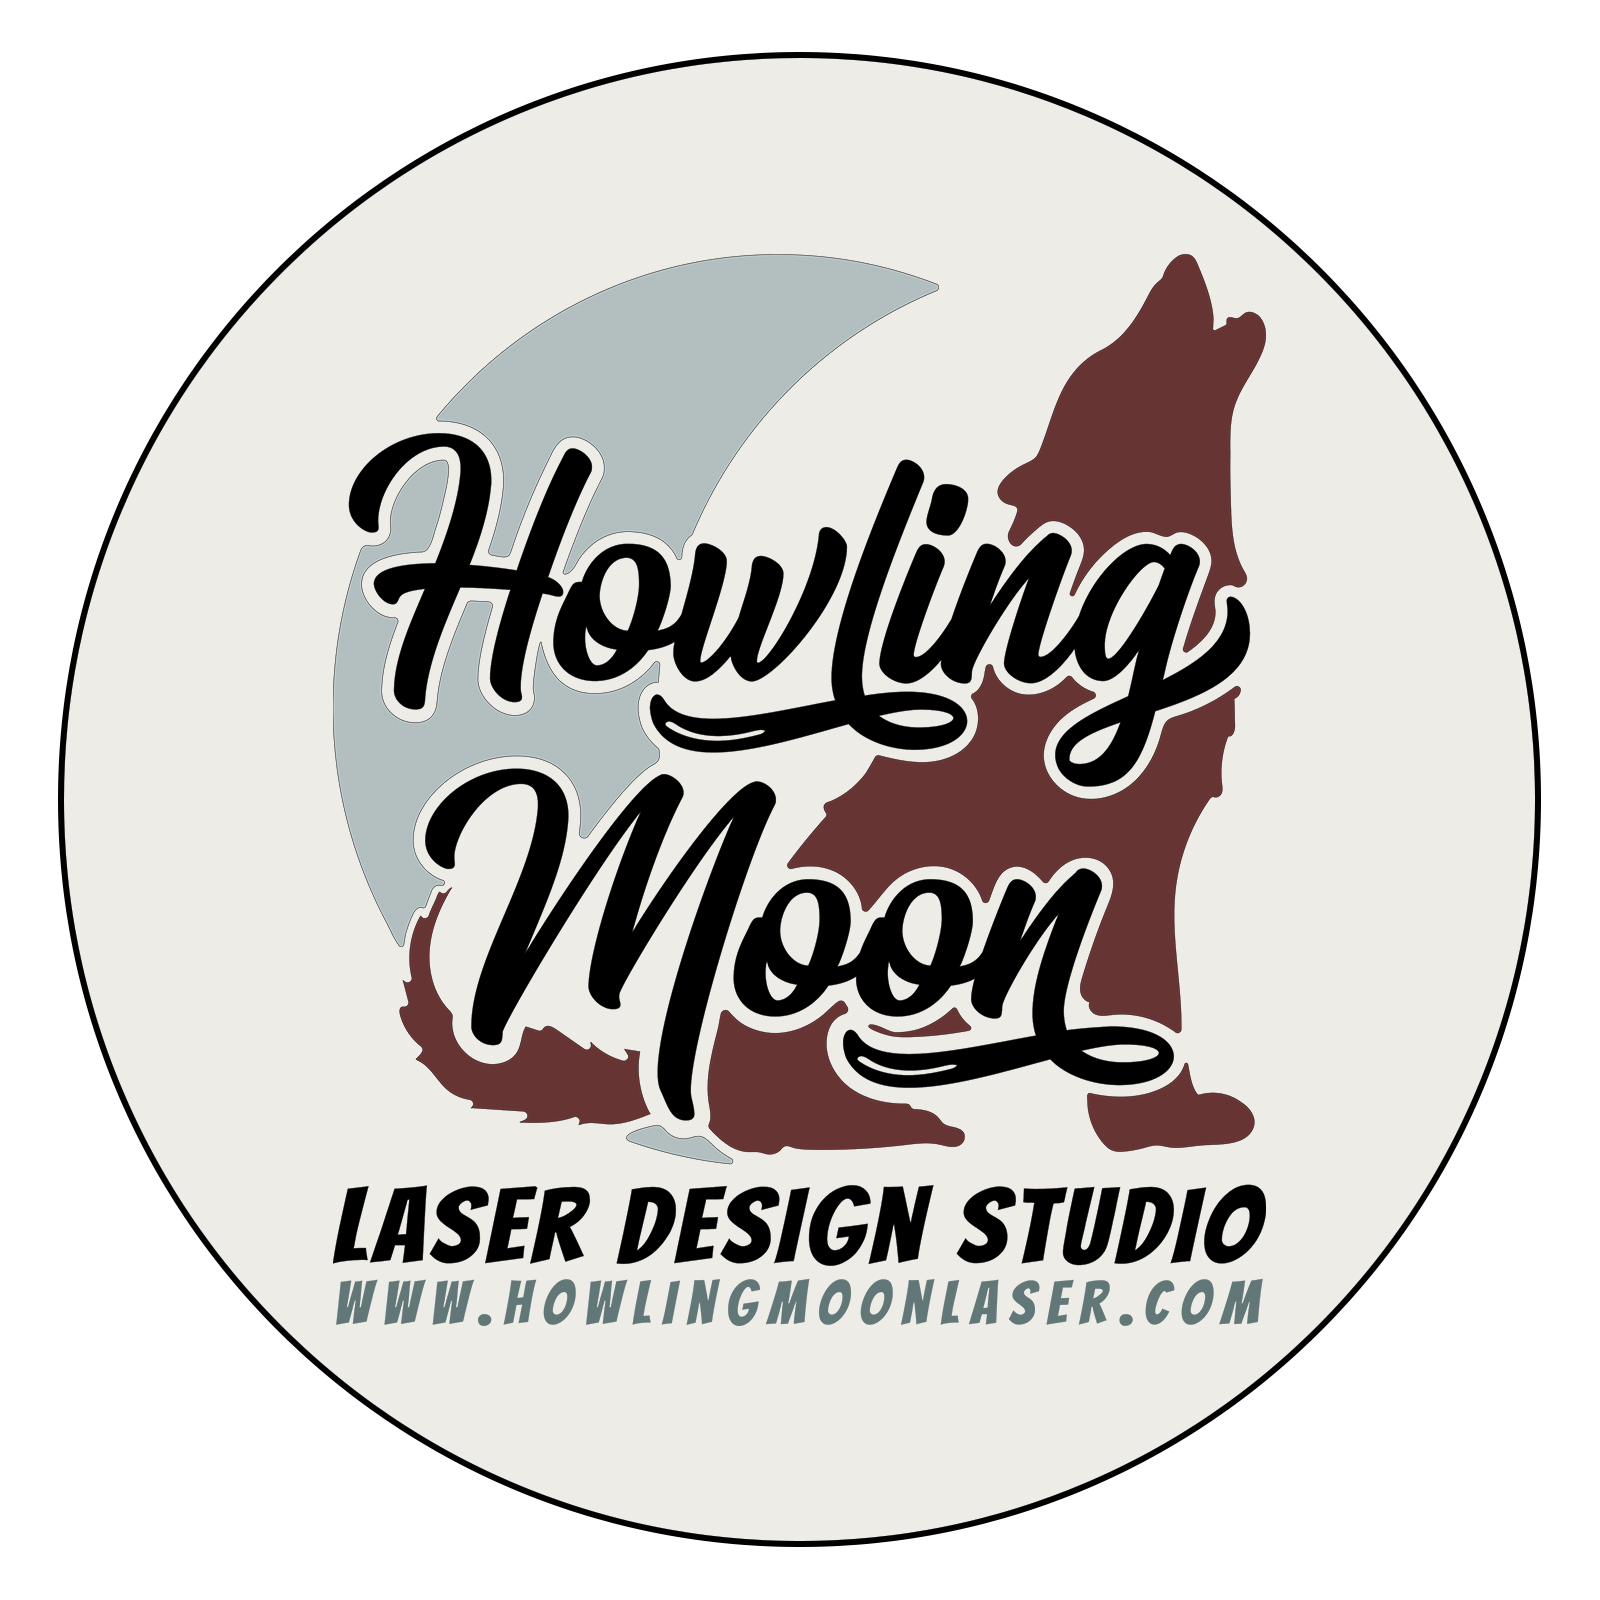 Howling Moon Laser Design